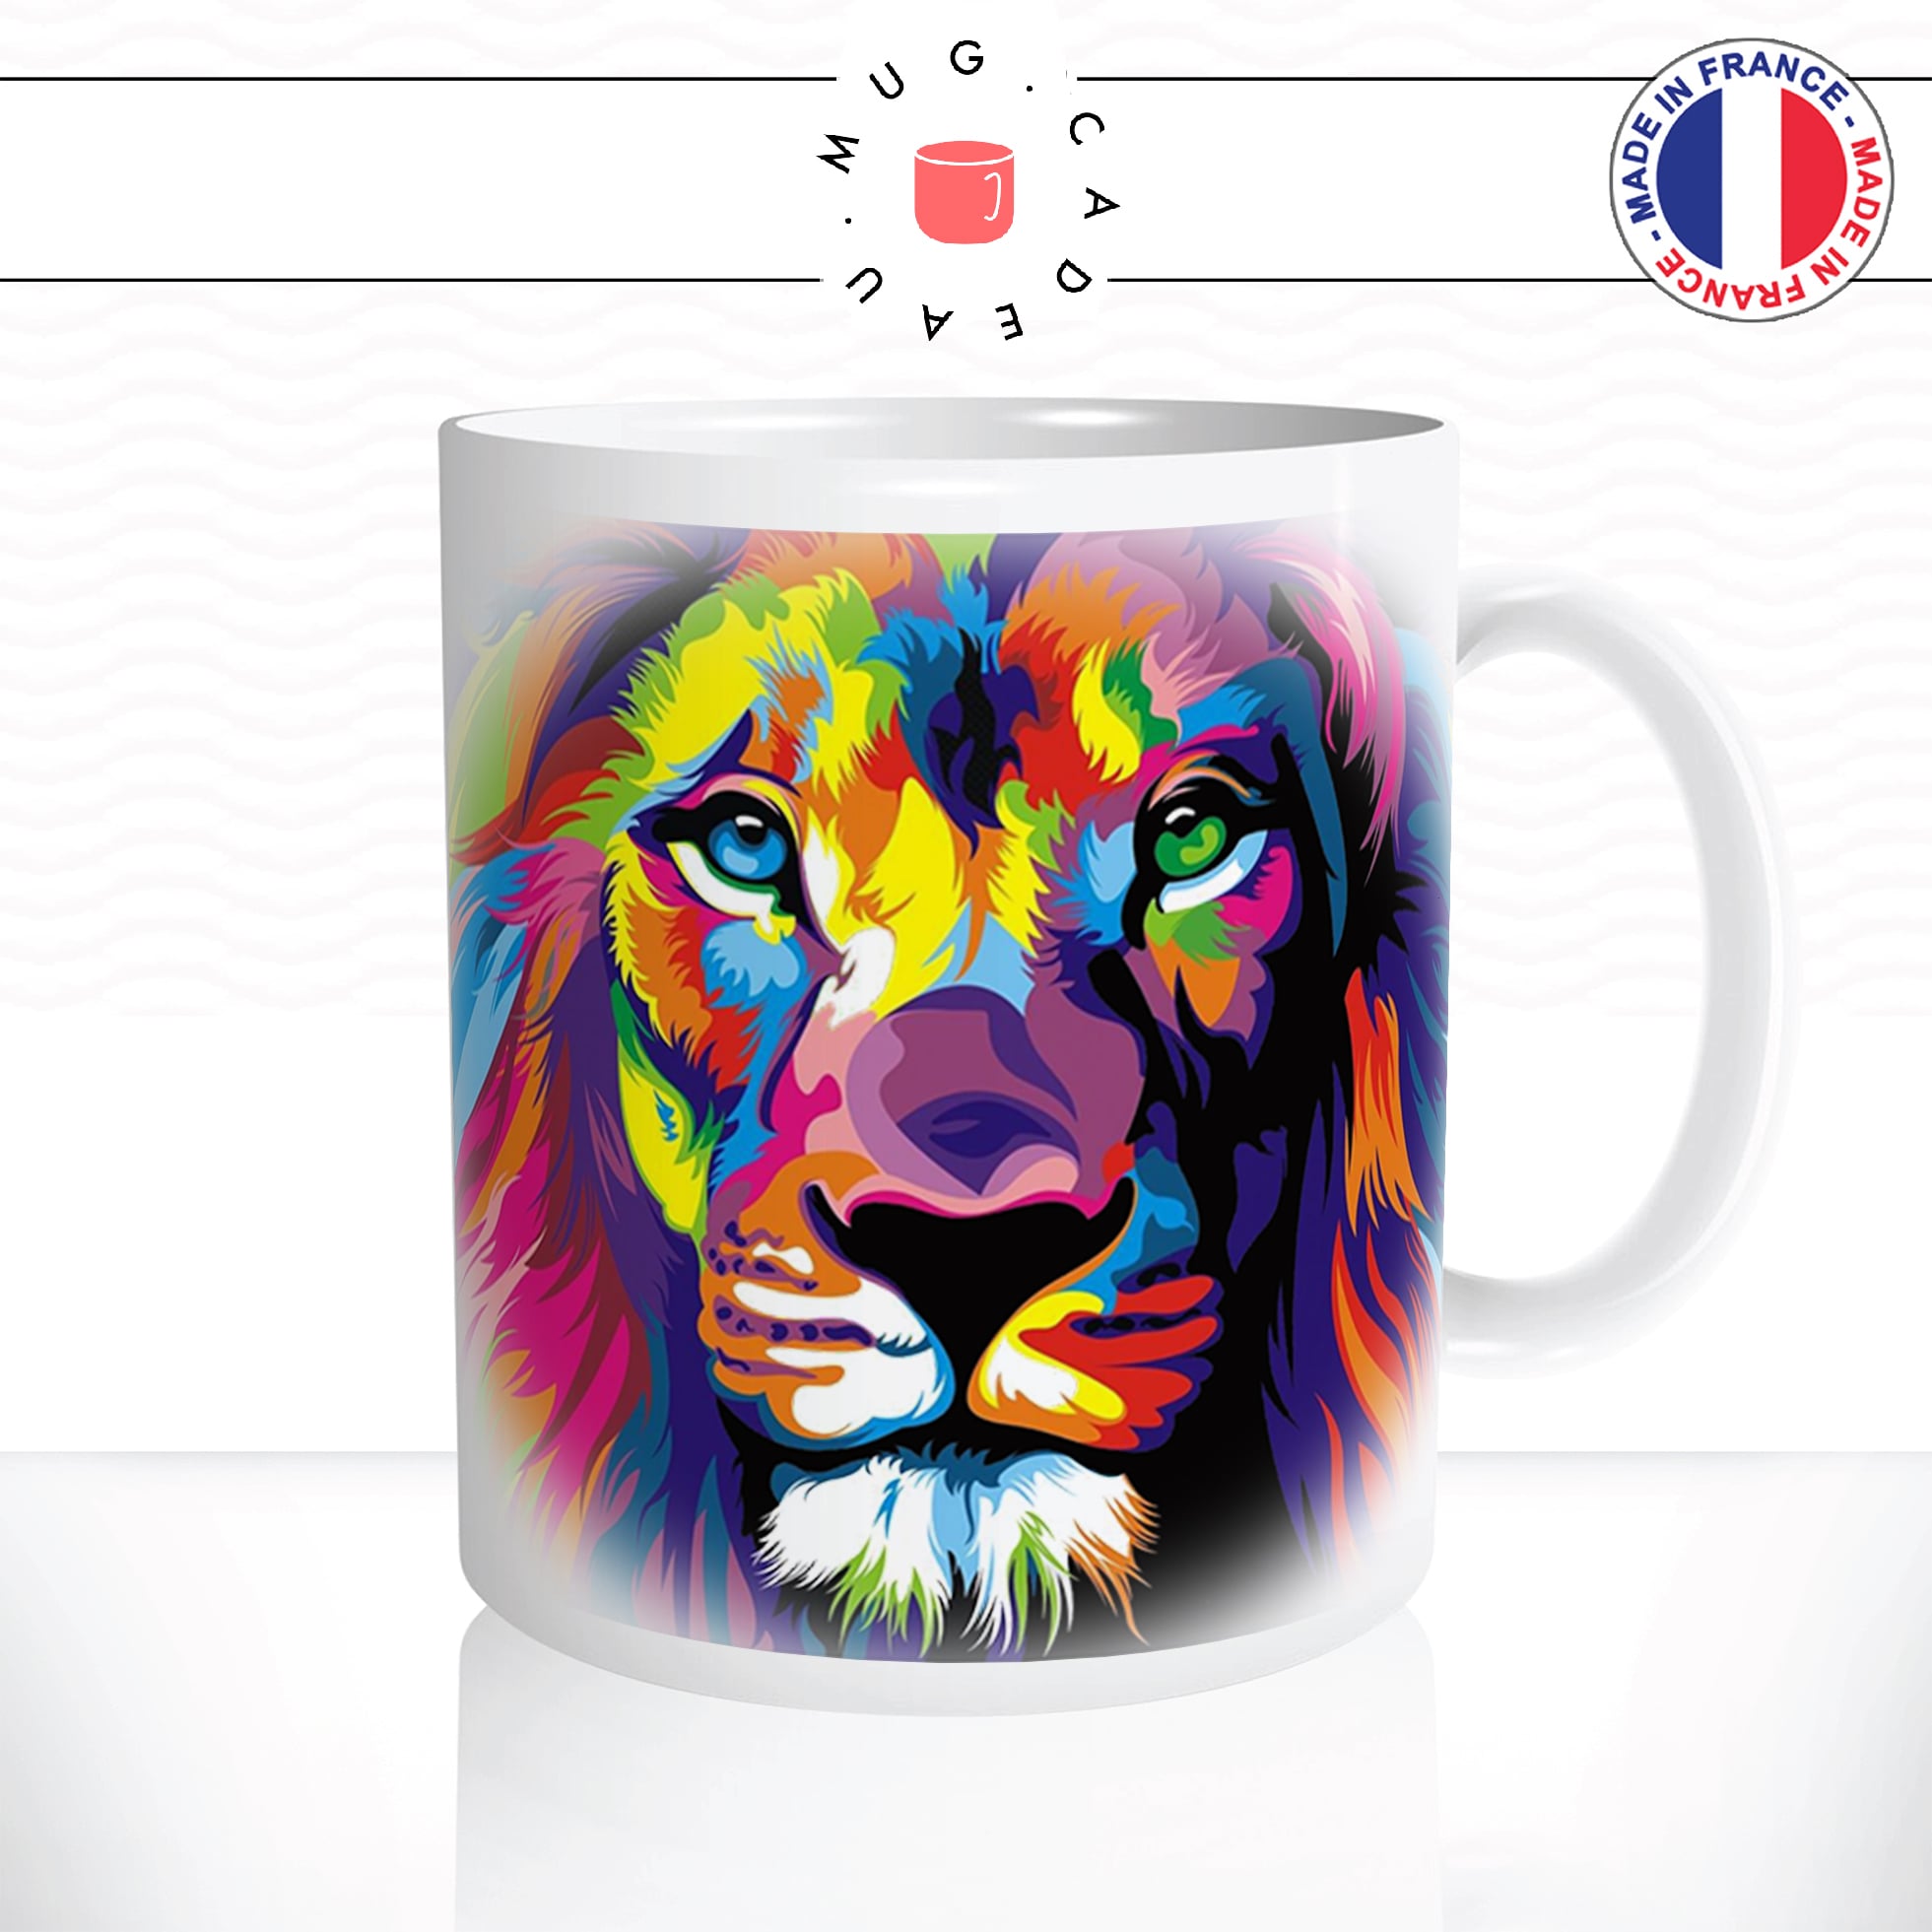 mug-tasse-ref2-lion-couleurs-halo-cafe-the-mugs-tasses-personnalise-personnalisable-anse-droite-min